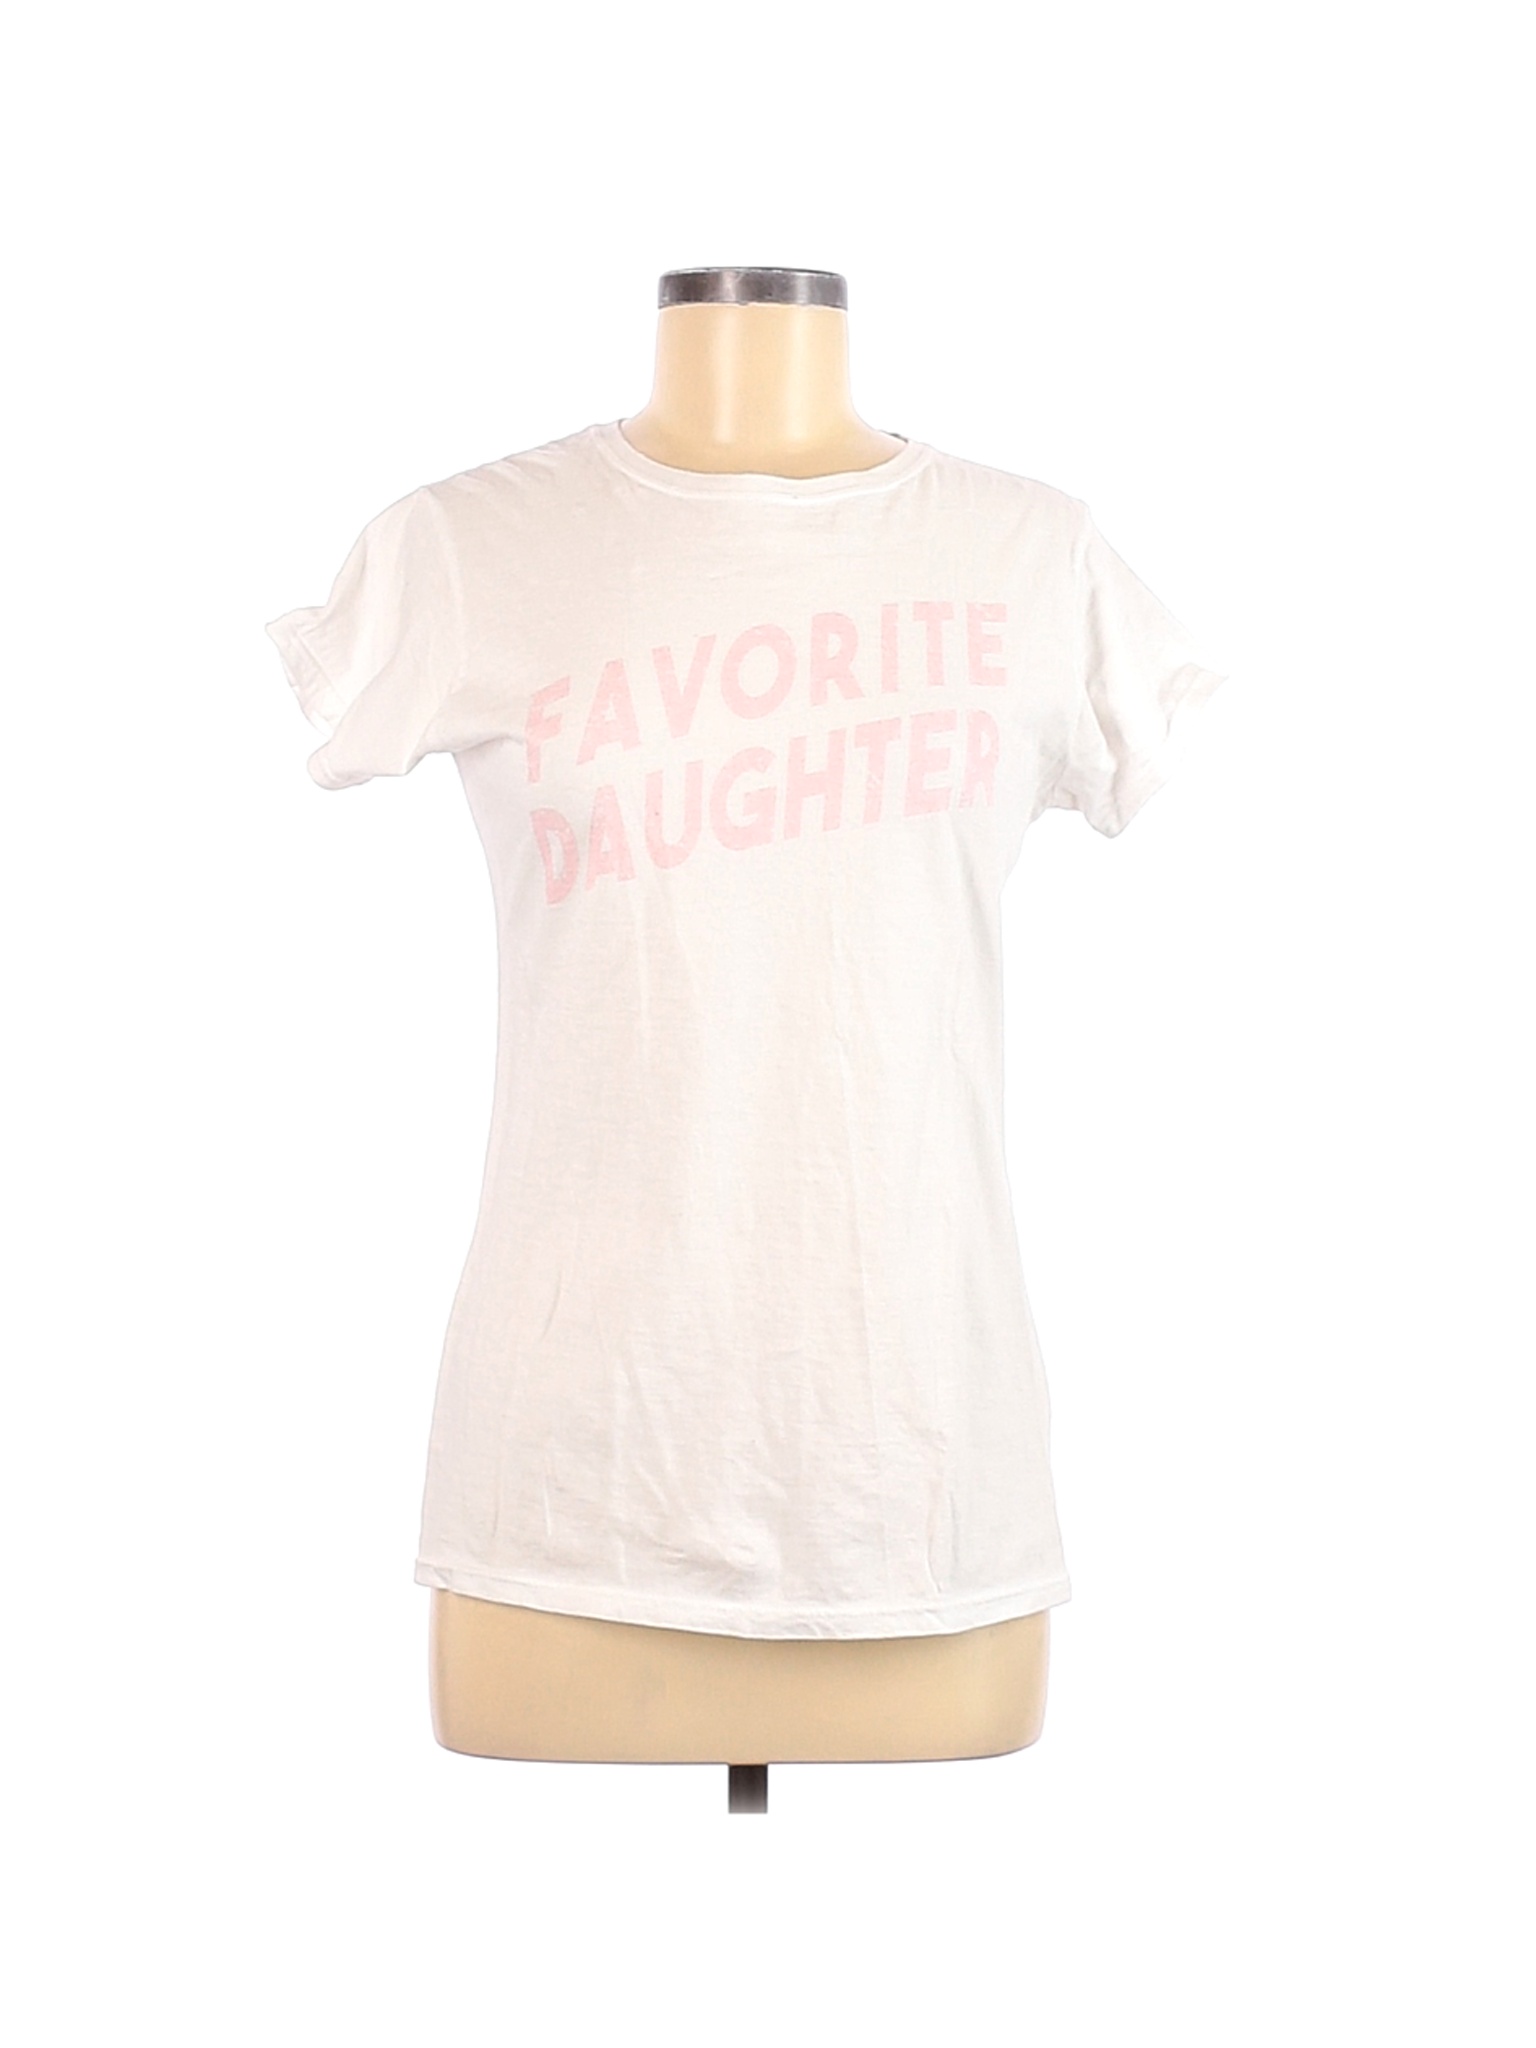 Chummy Tees Women White Short Sleeve T-Shirt L | eBay